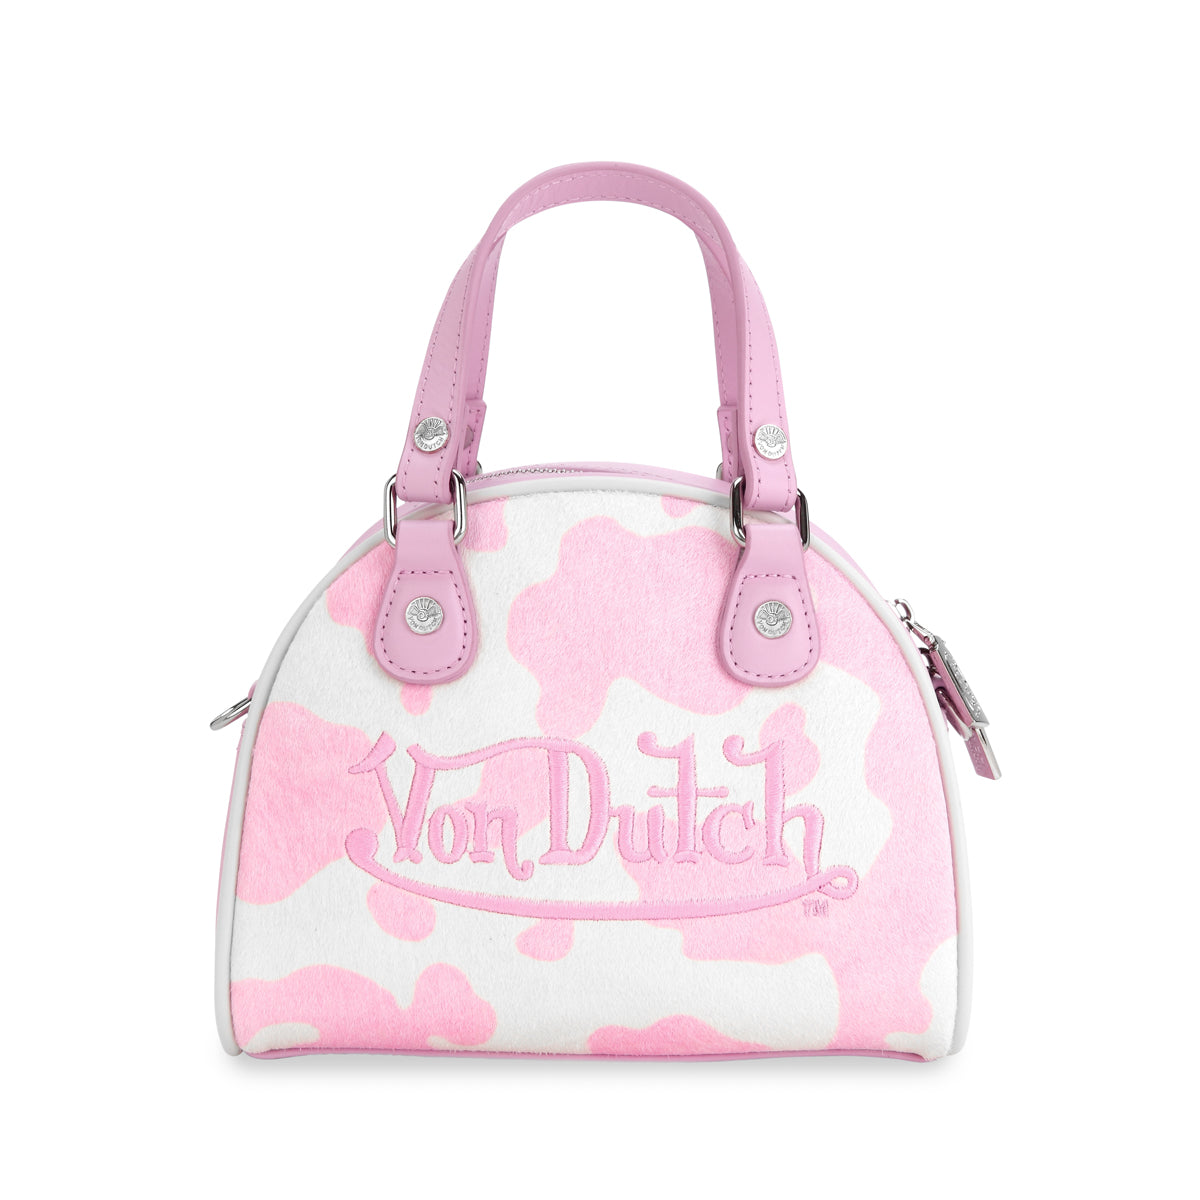 Pink & White Cow Print Pony Hair Leather Small Bowling Bag - Von Dutch